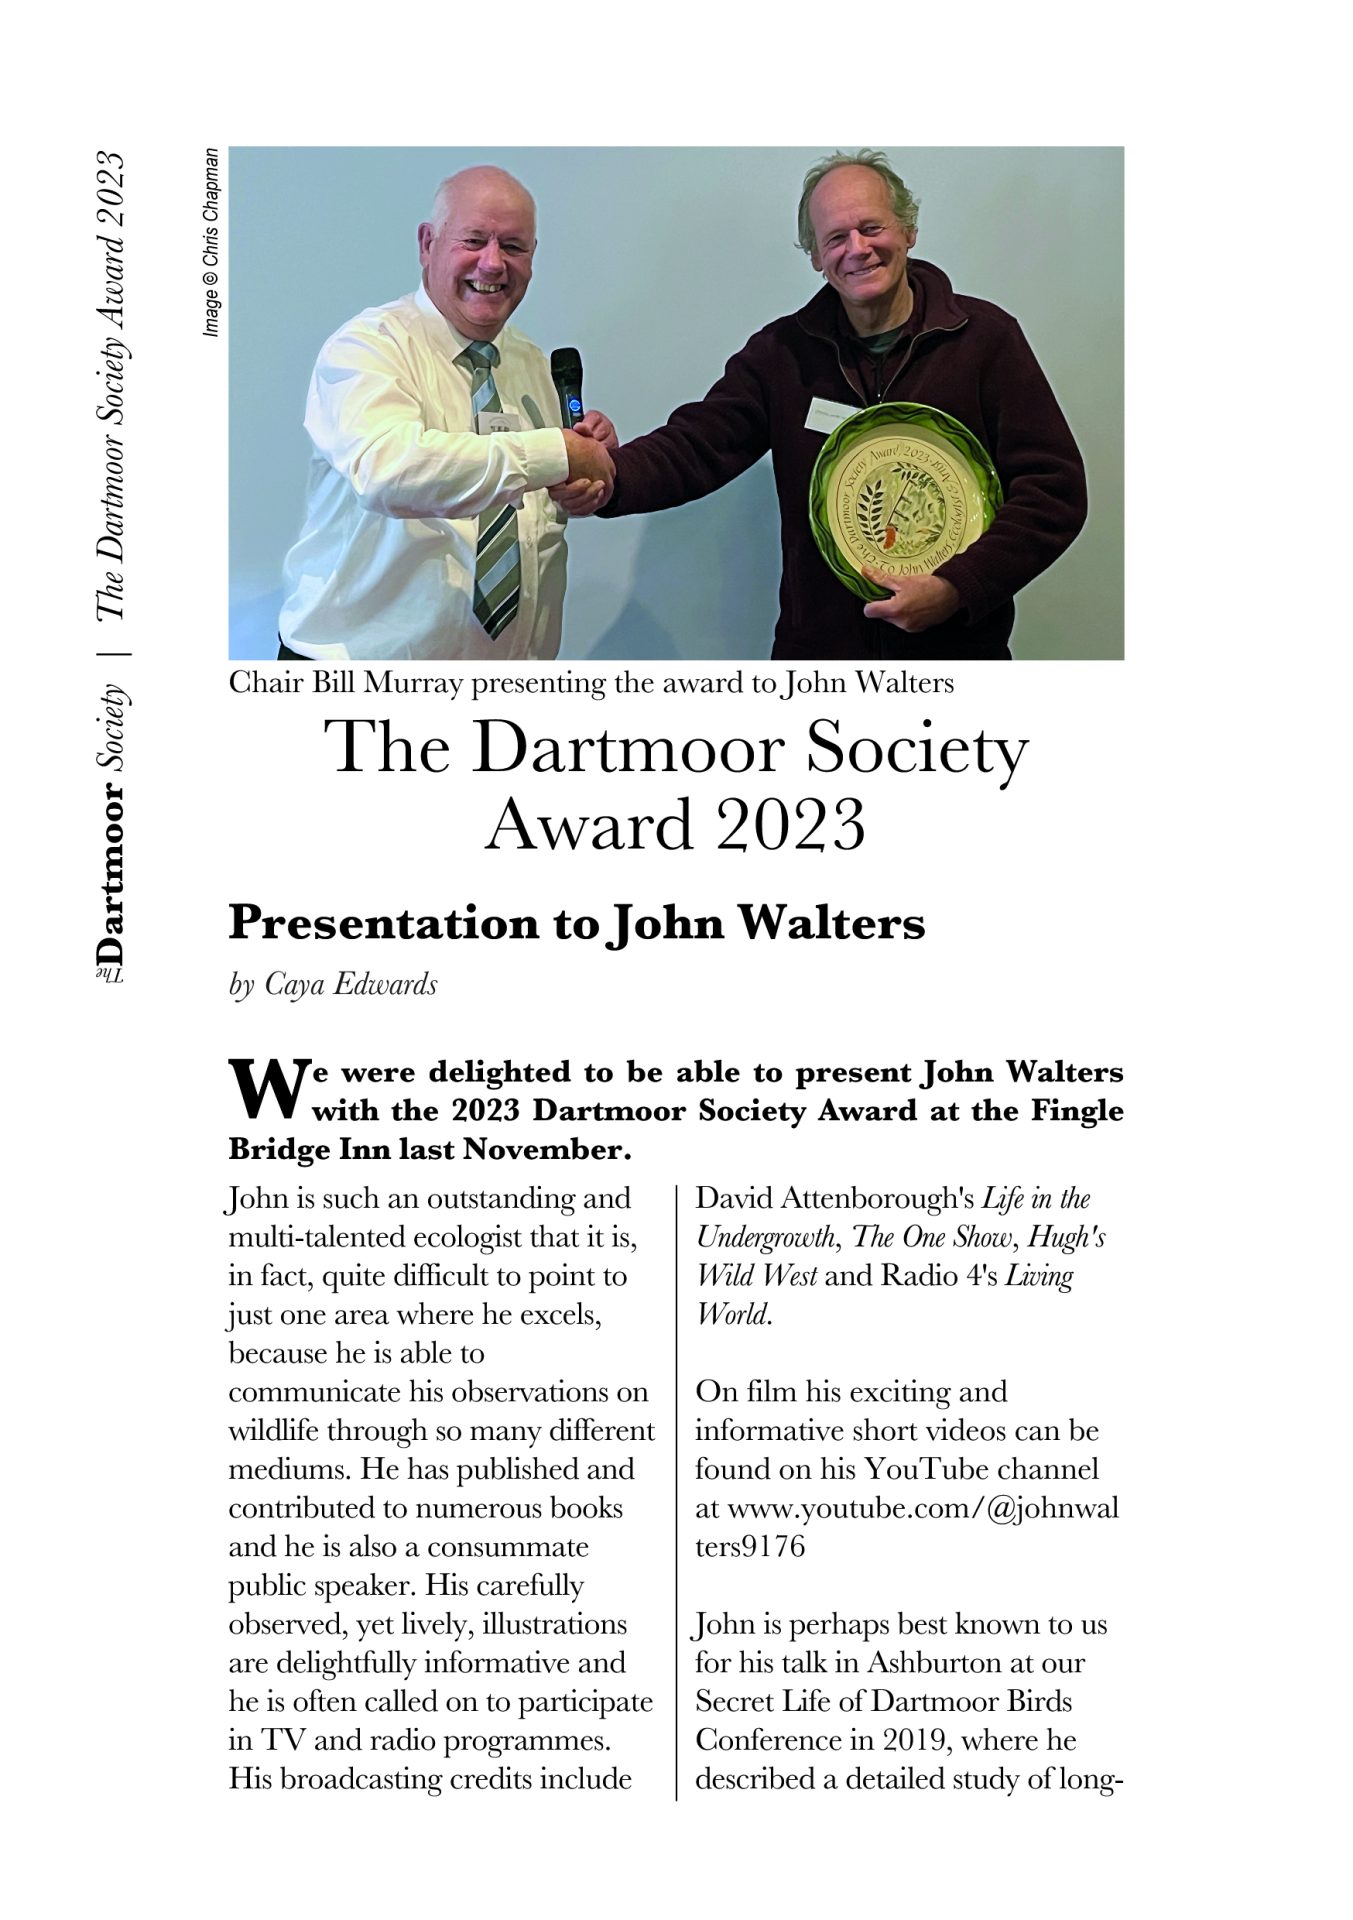 John Walters is the recipient of the 2023 Dartmoor Society award